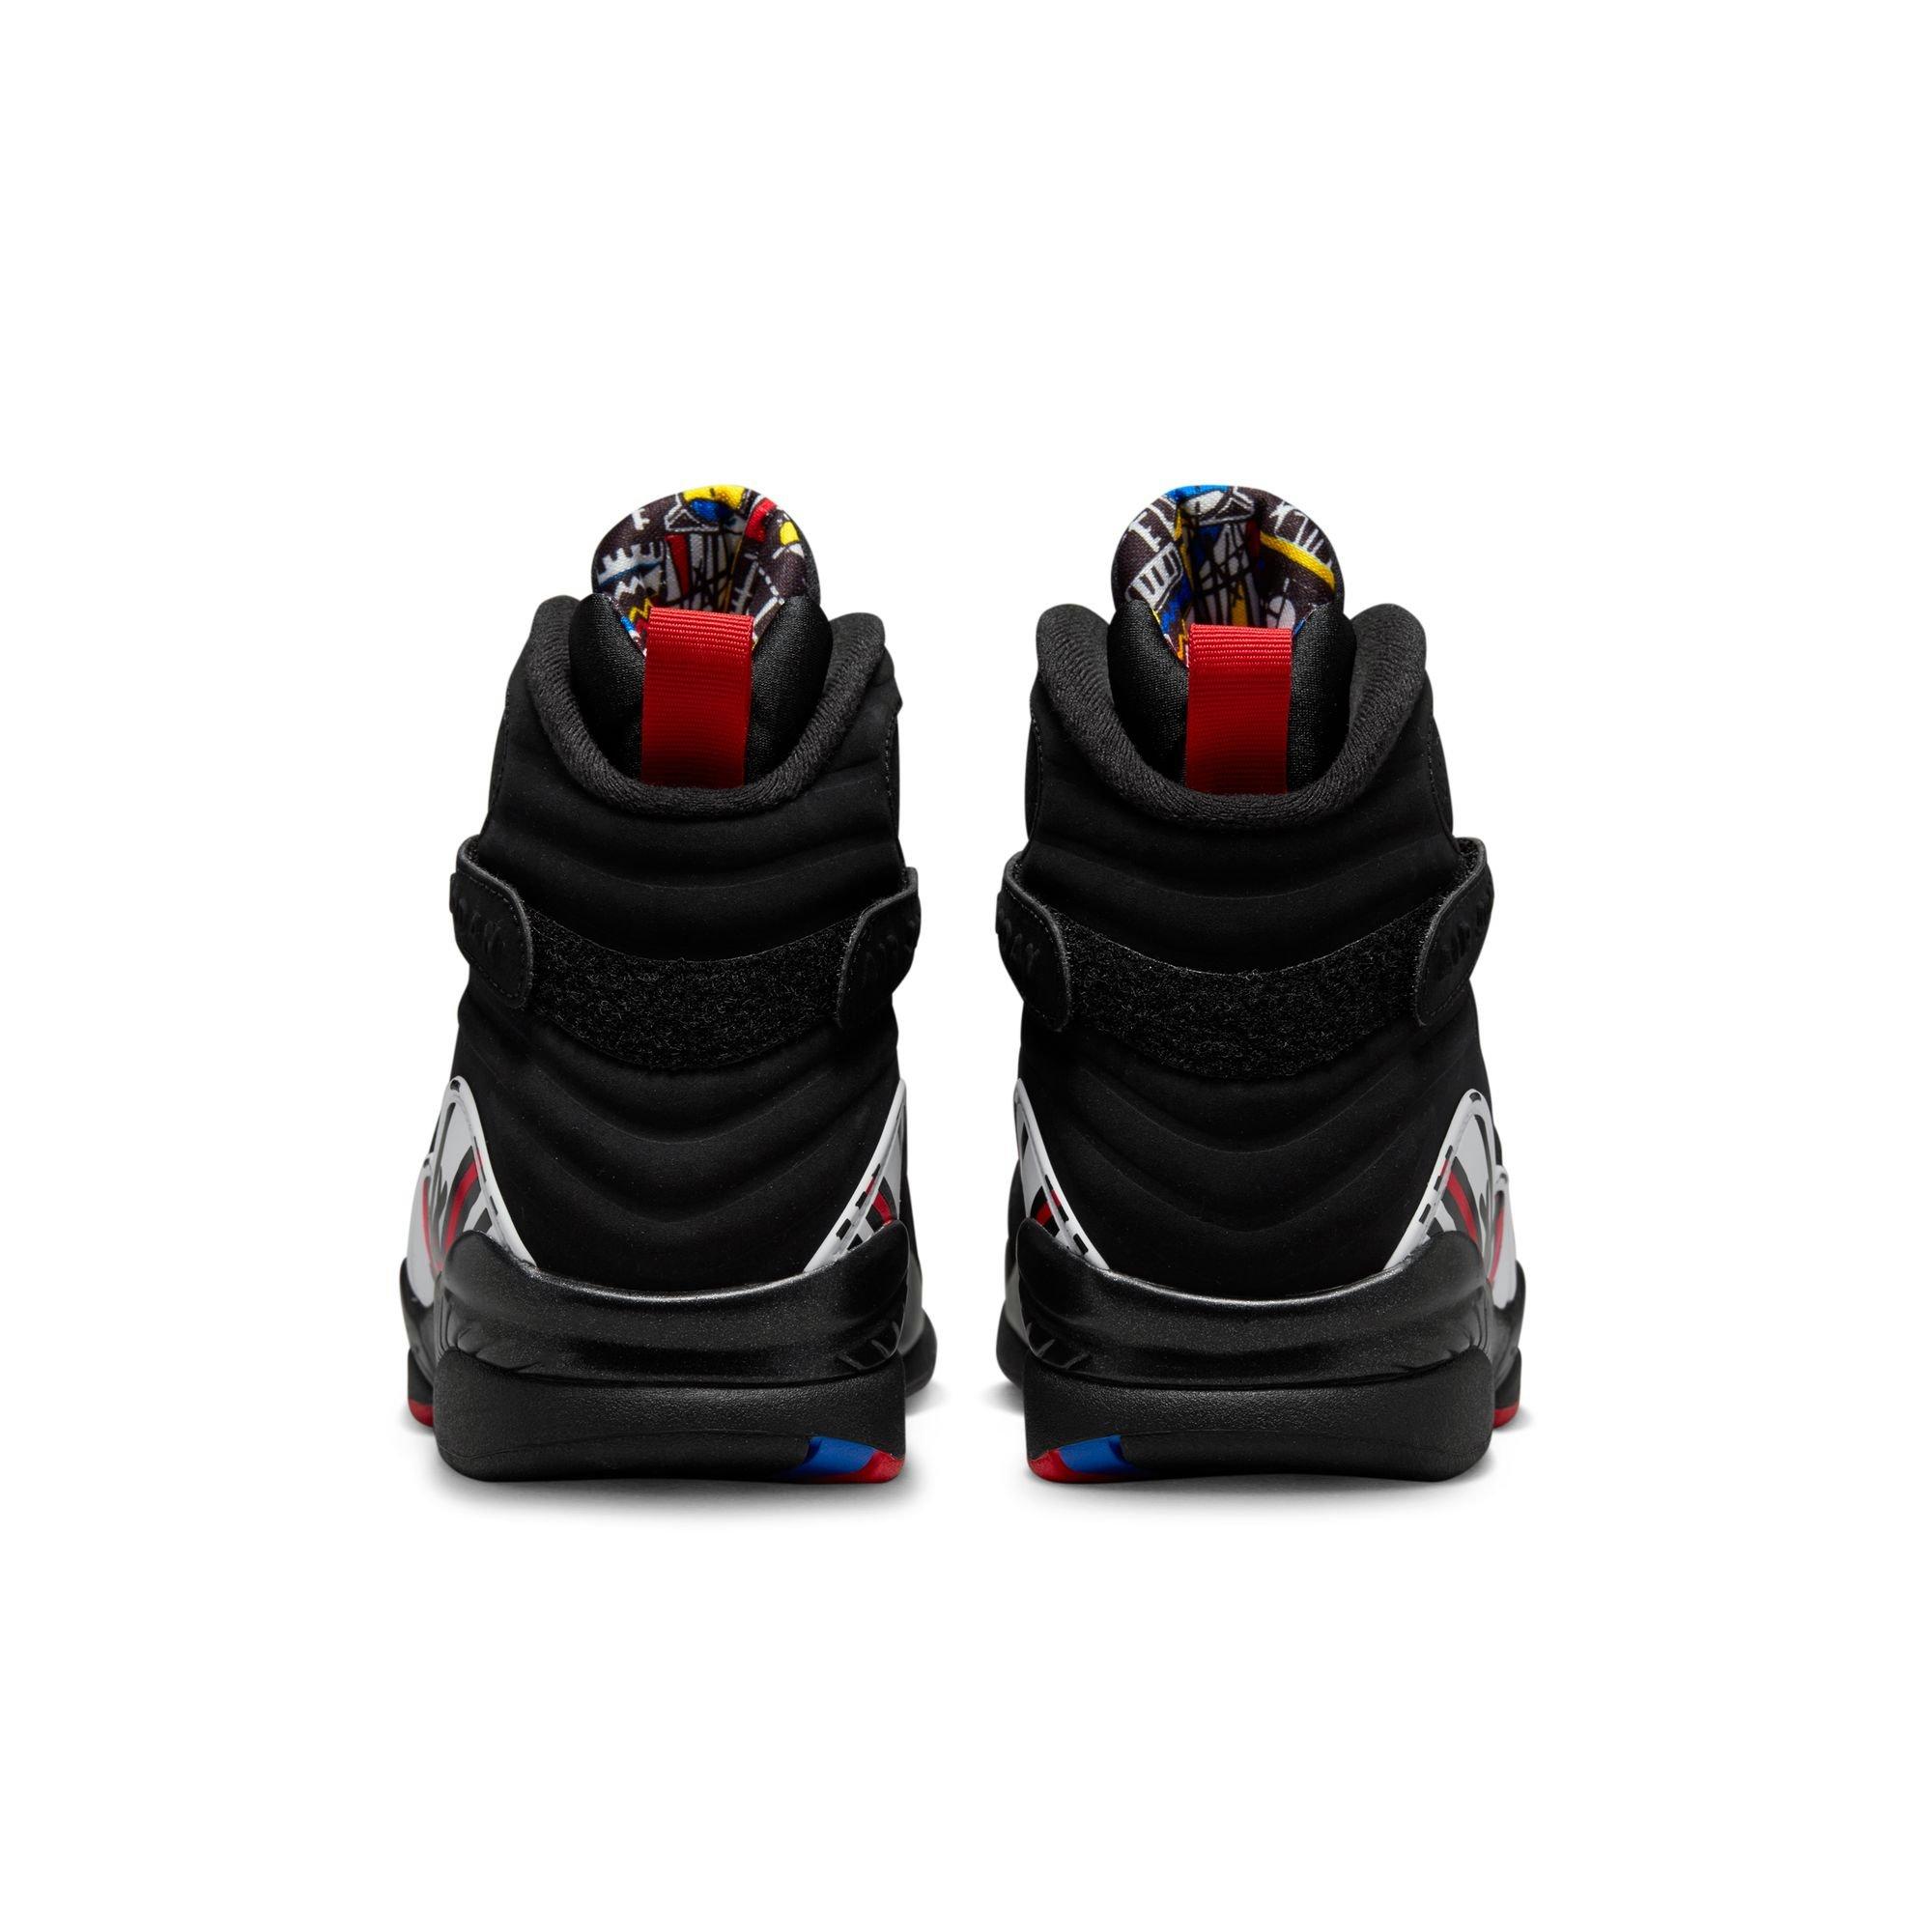 Air Jordan 8 Retro (GS) in Black - Size 5